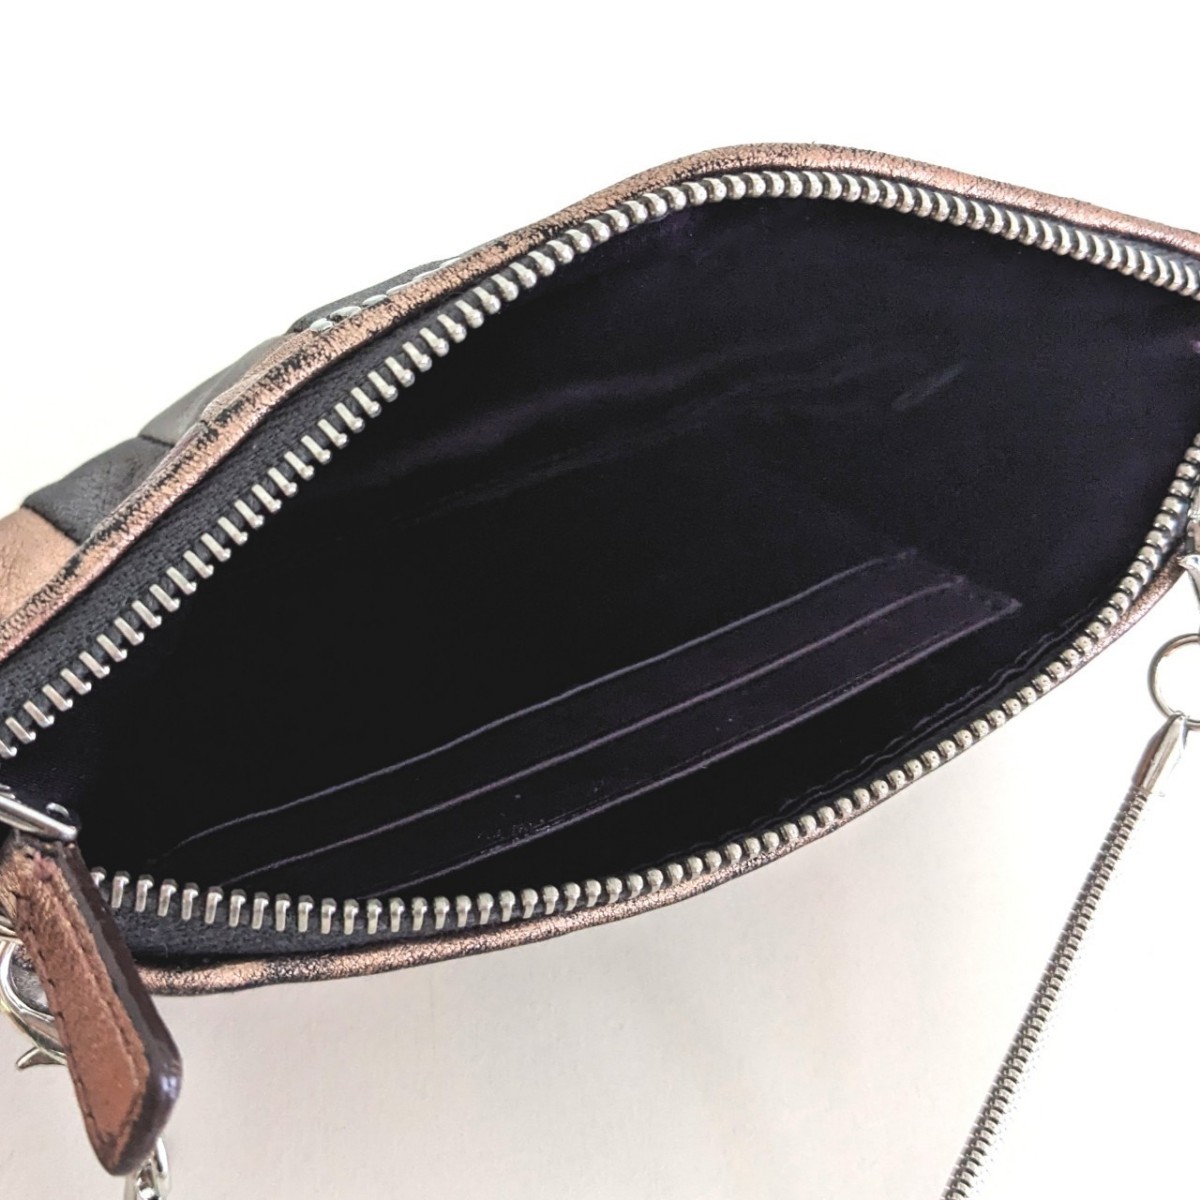  superior article MiuMiu 2way leather sakoshu pouch Mini shoulder bag purse pochette clutch bag bag body bag Prada PRADA